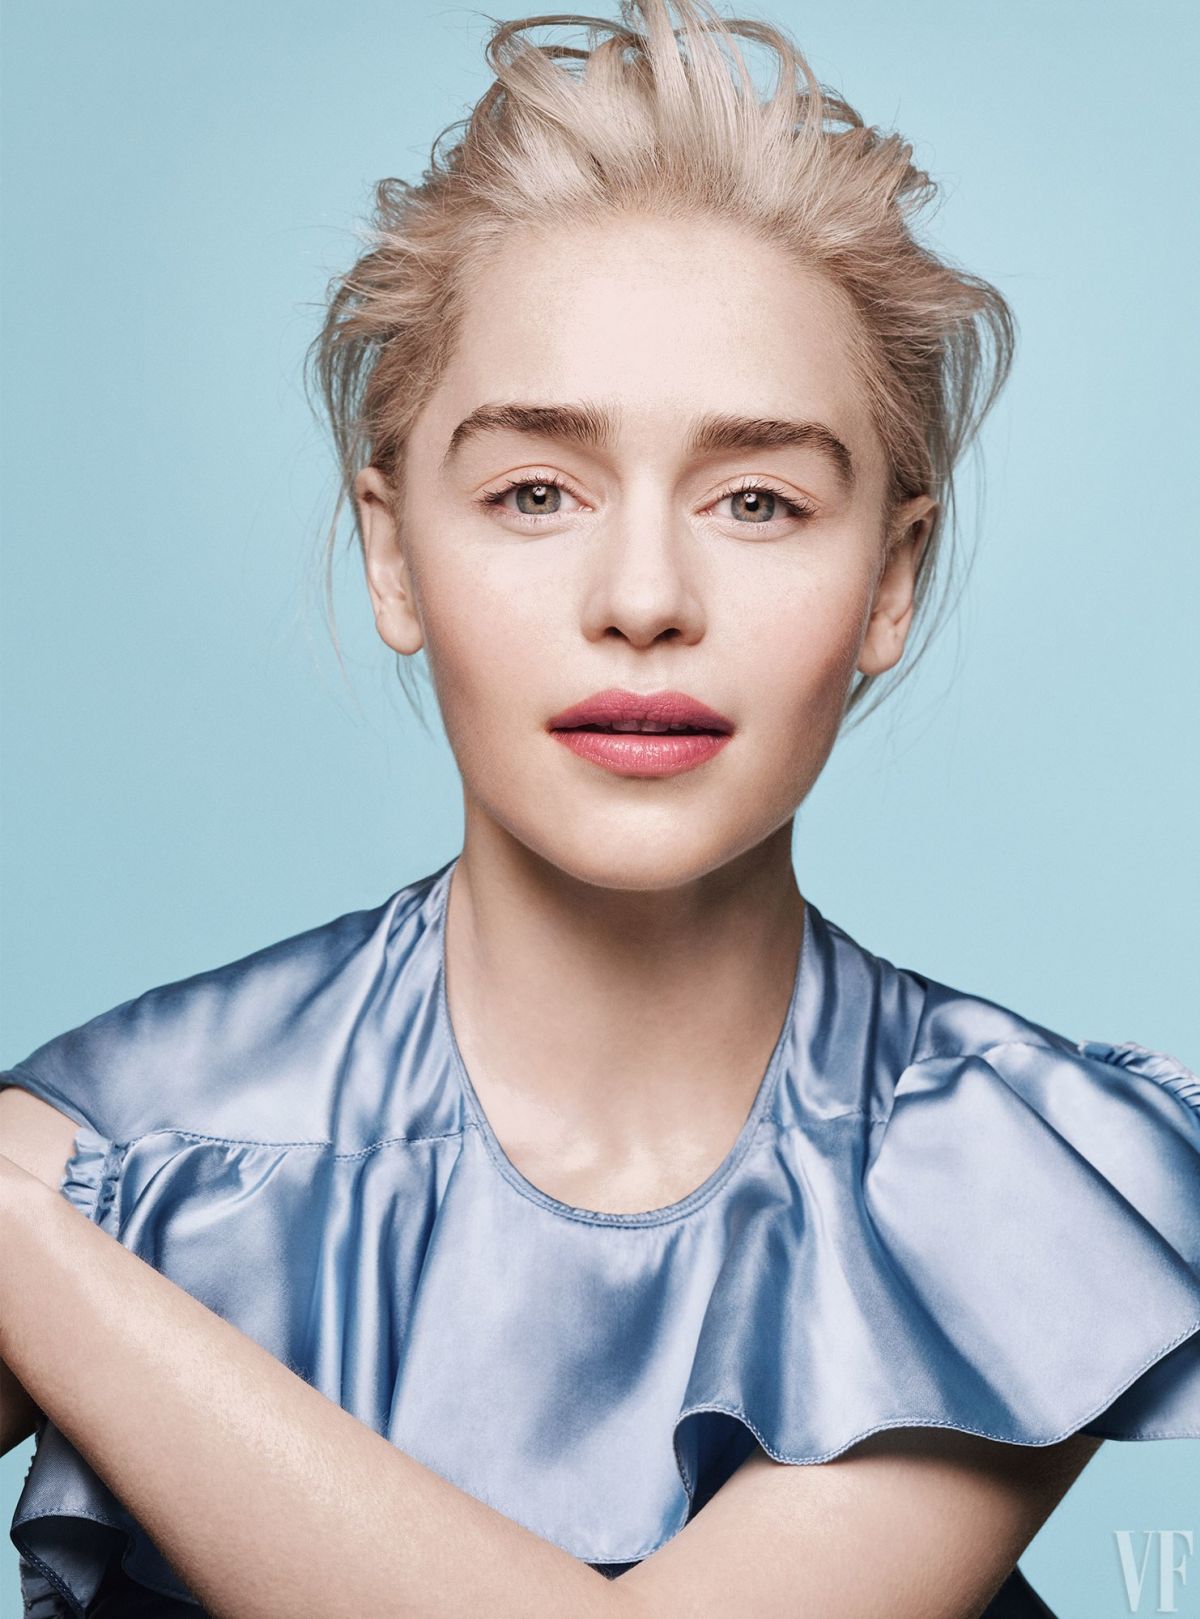 Emilia Clarke for Vanity Fair, Summer 2018